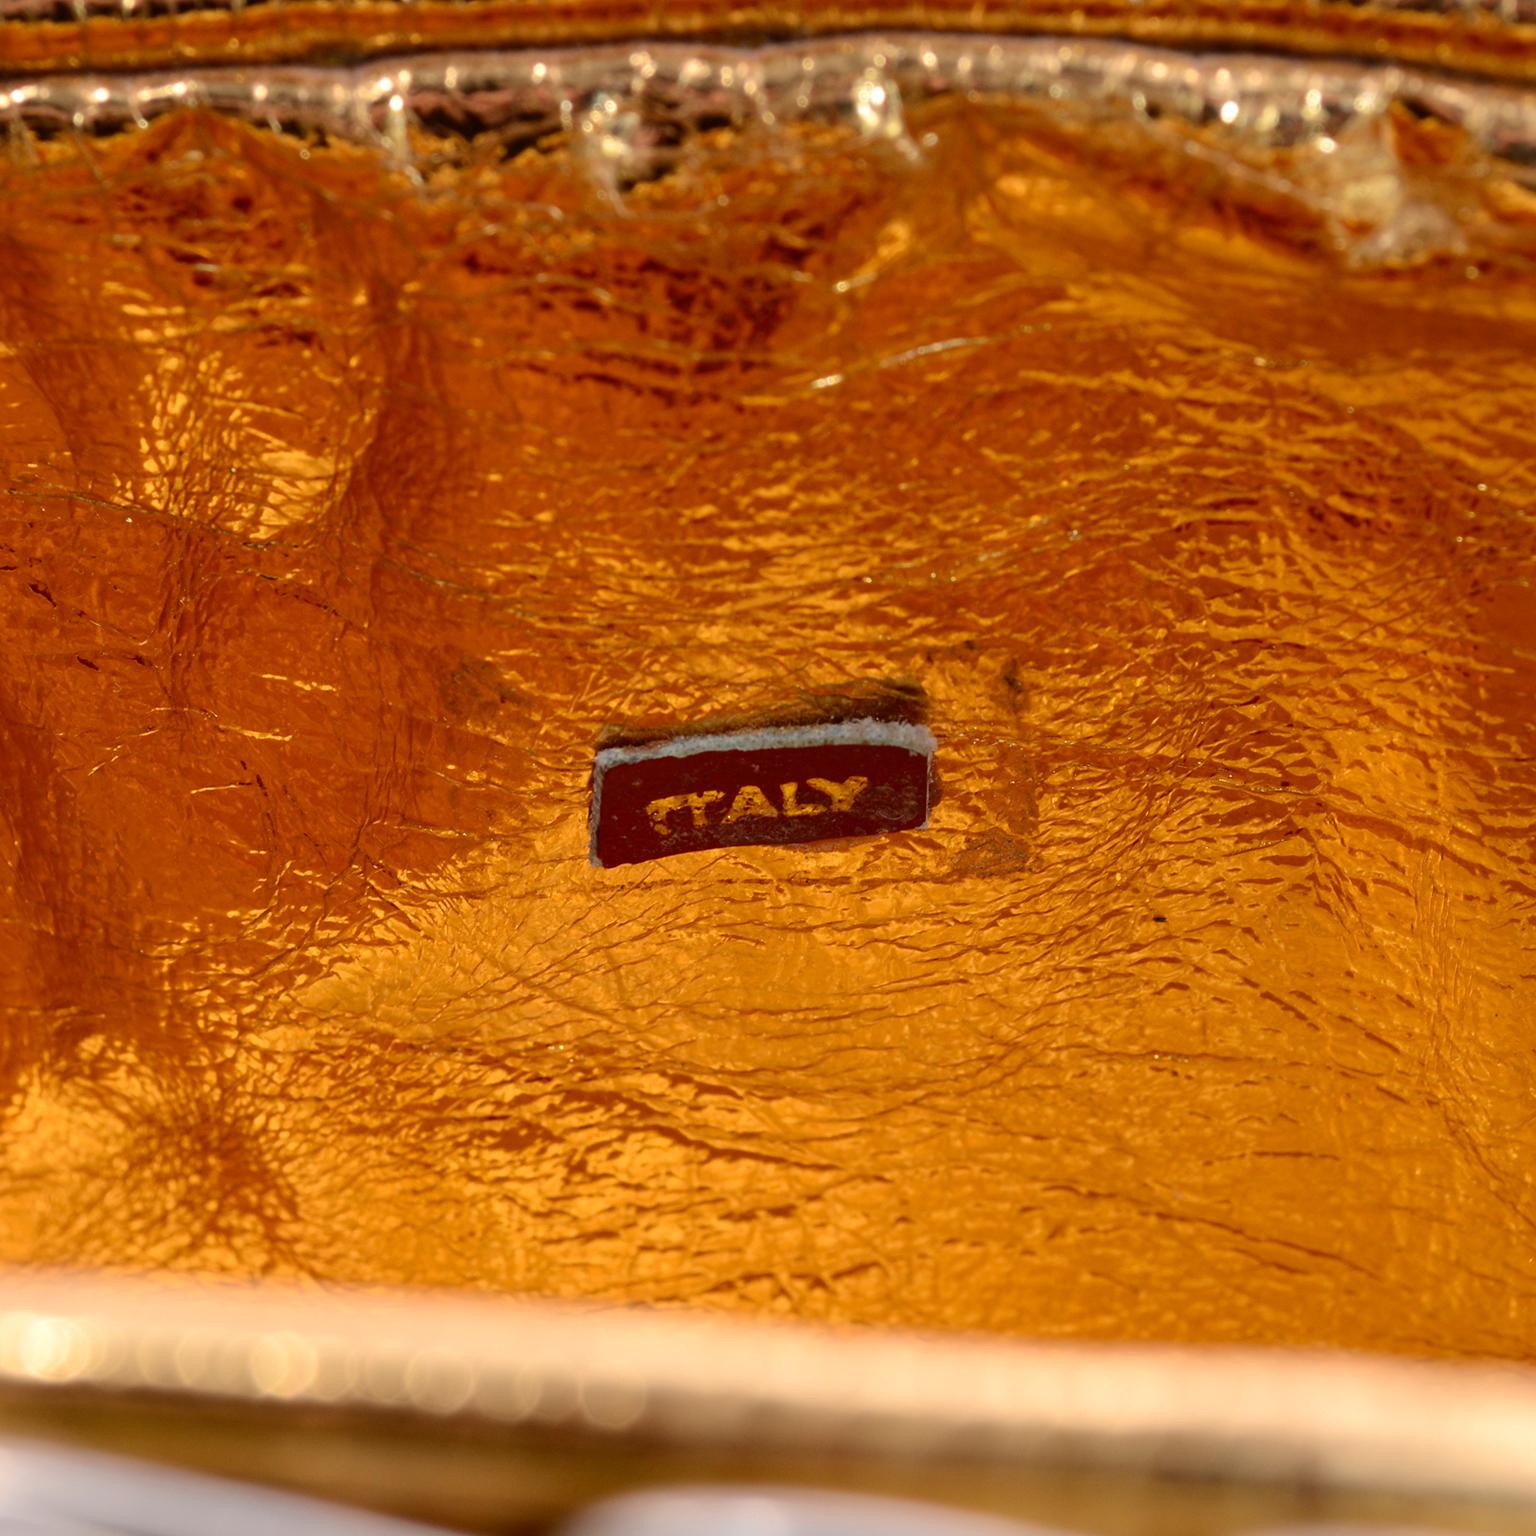 Koret Vintage Handbag in Gold & Silver Woven Metal Top Handle Day or Evening Bag 2